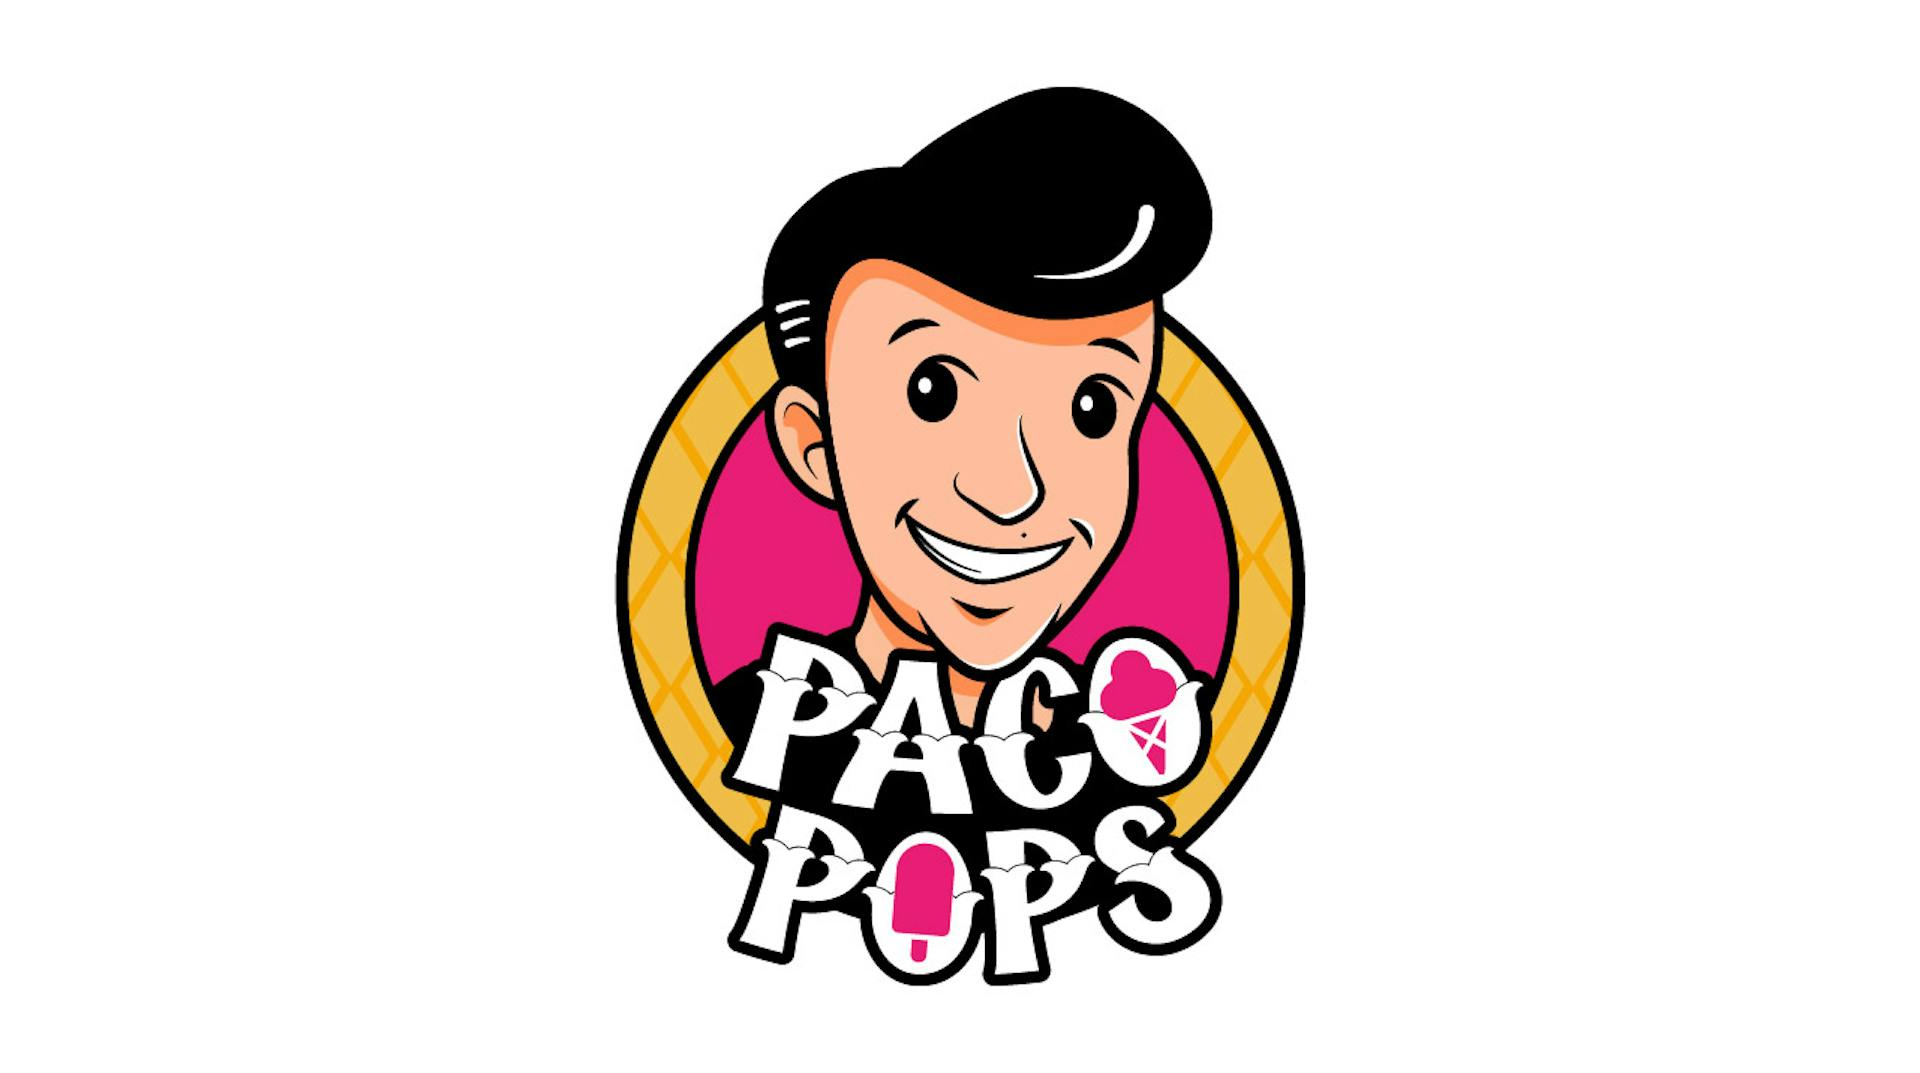 Paco Pops